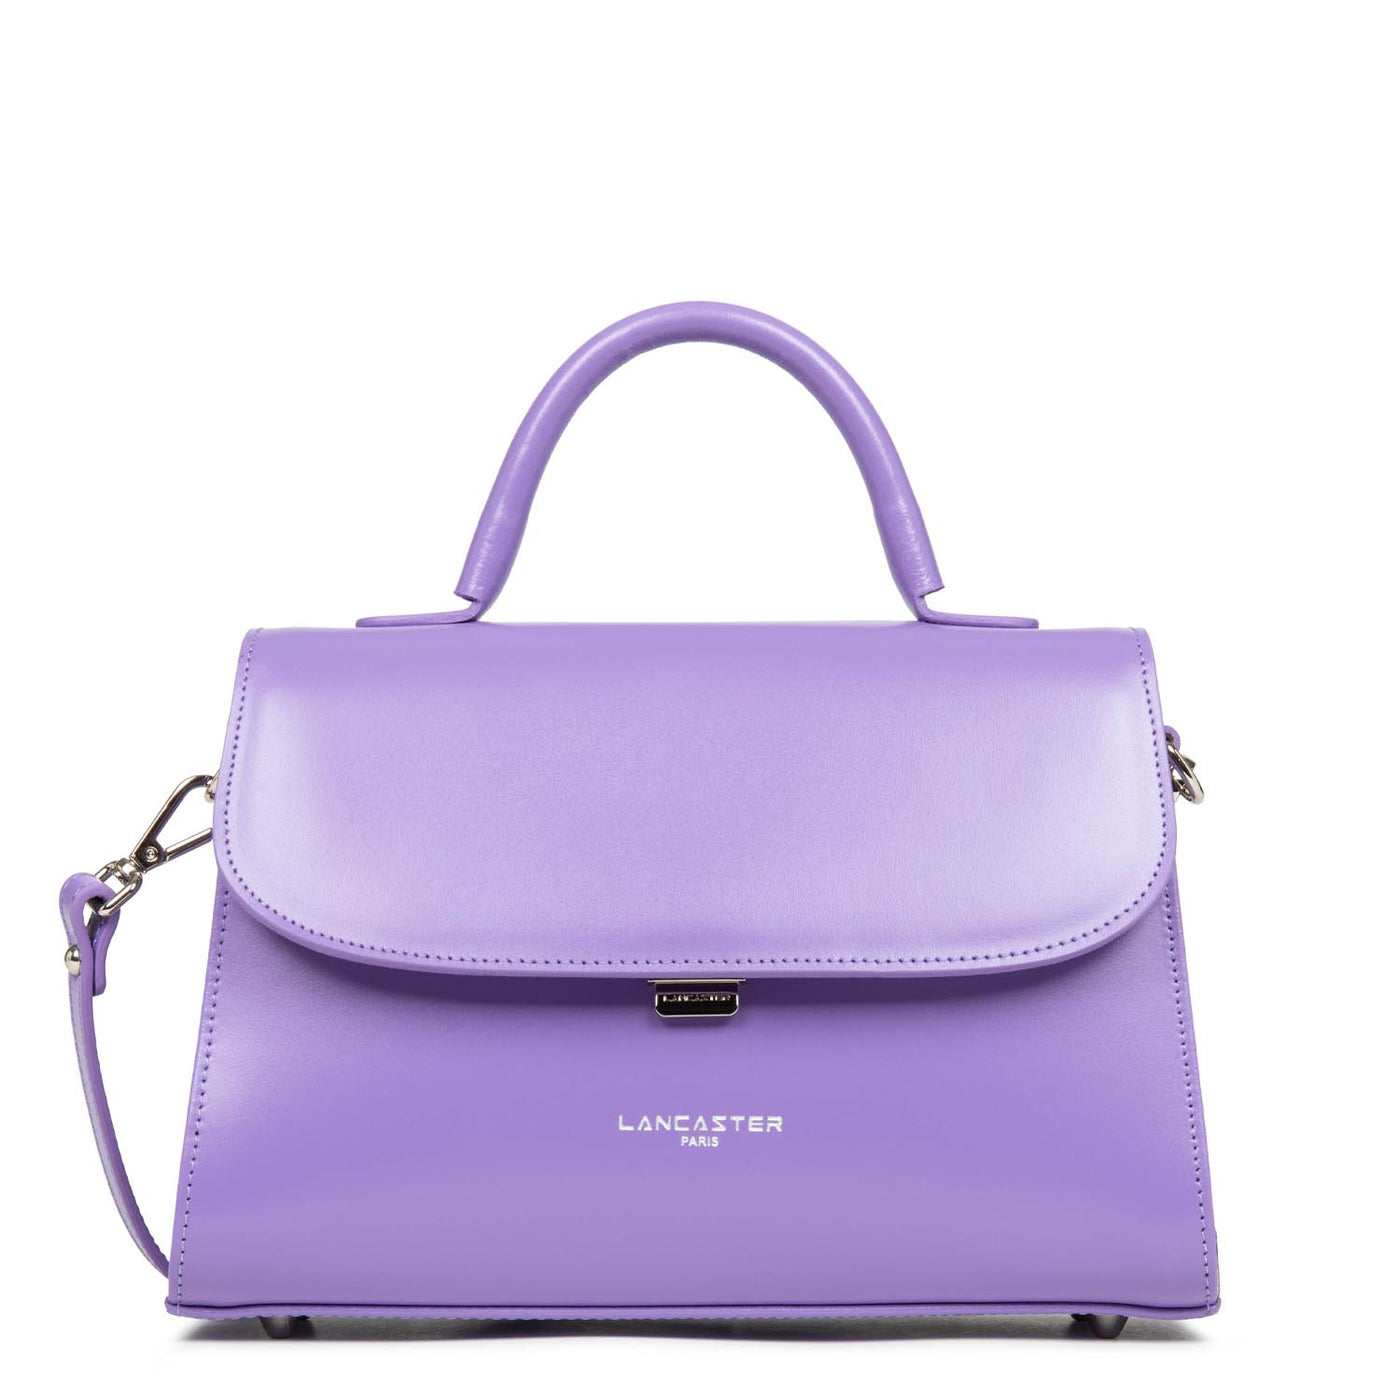 m handbag - suave even #couleur_iris